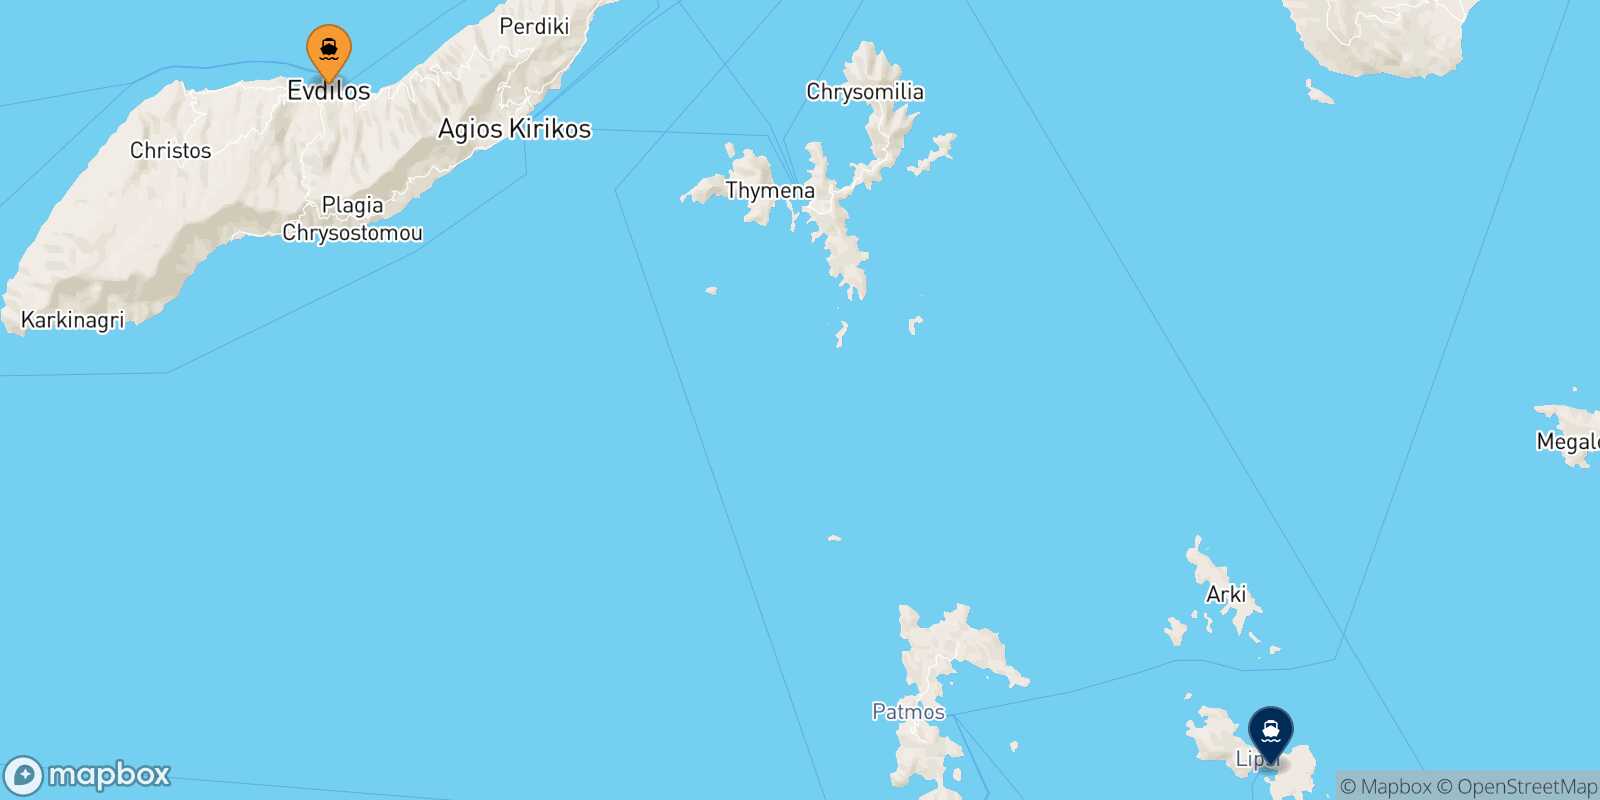 Evdilos (Ikaria) Lipsi route map